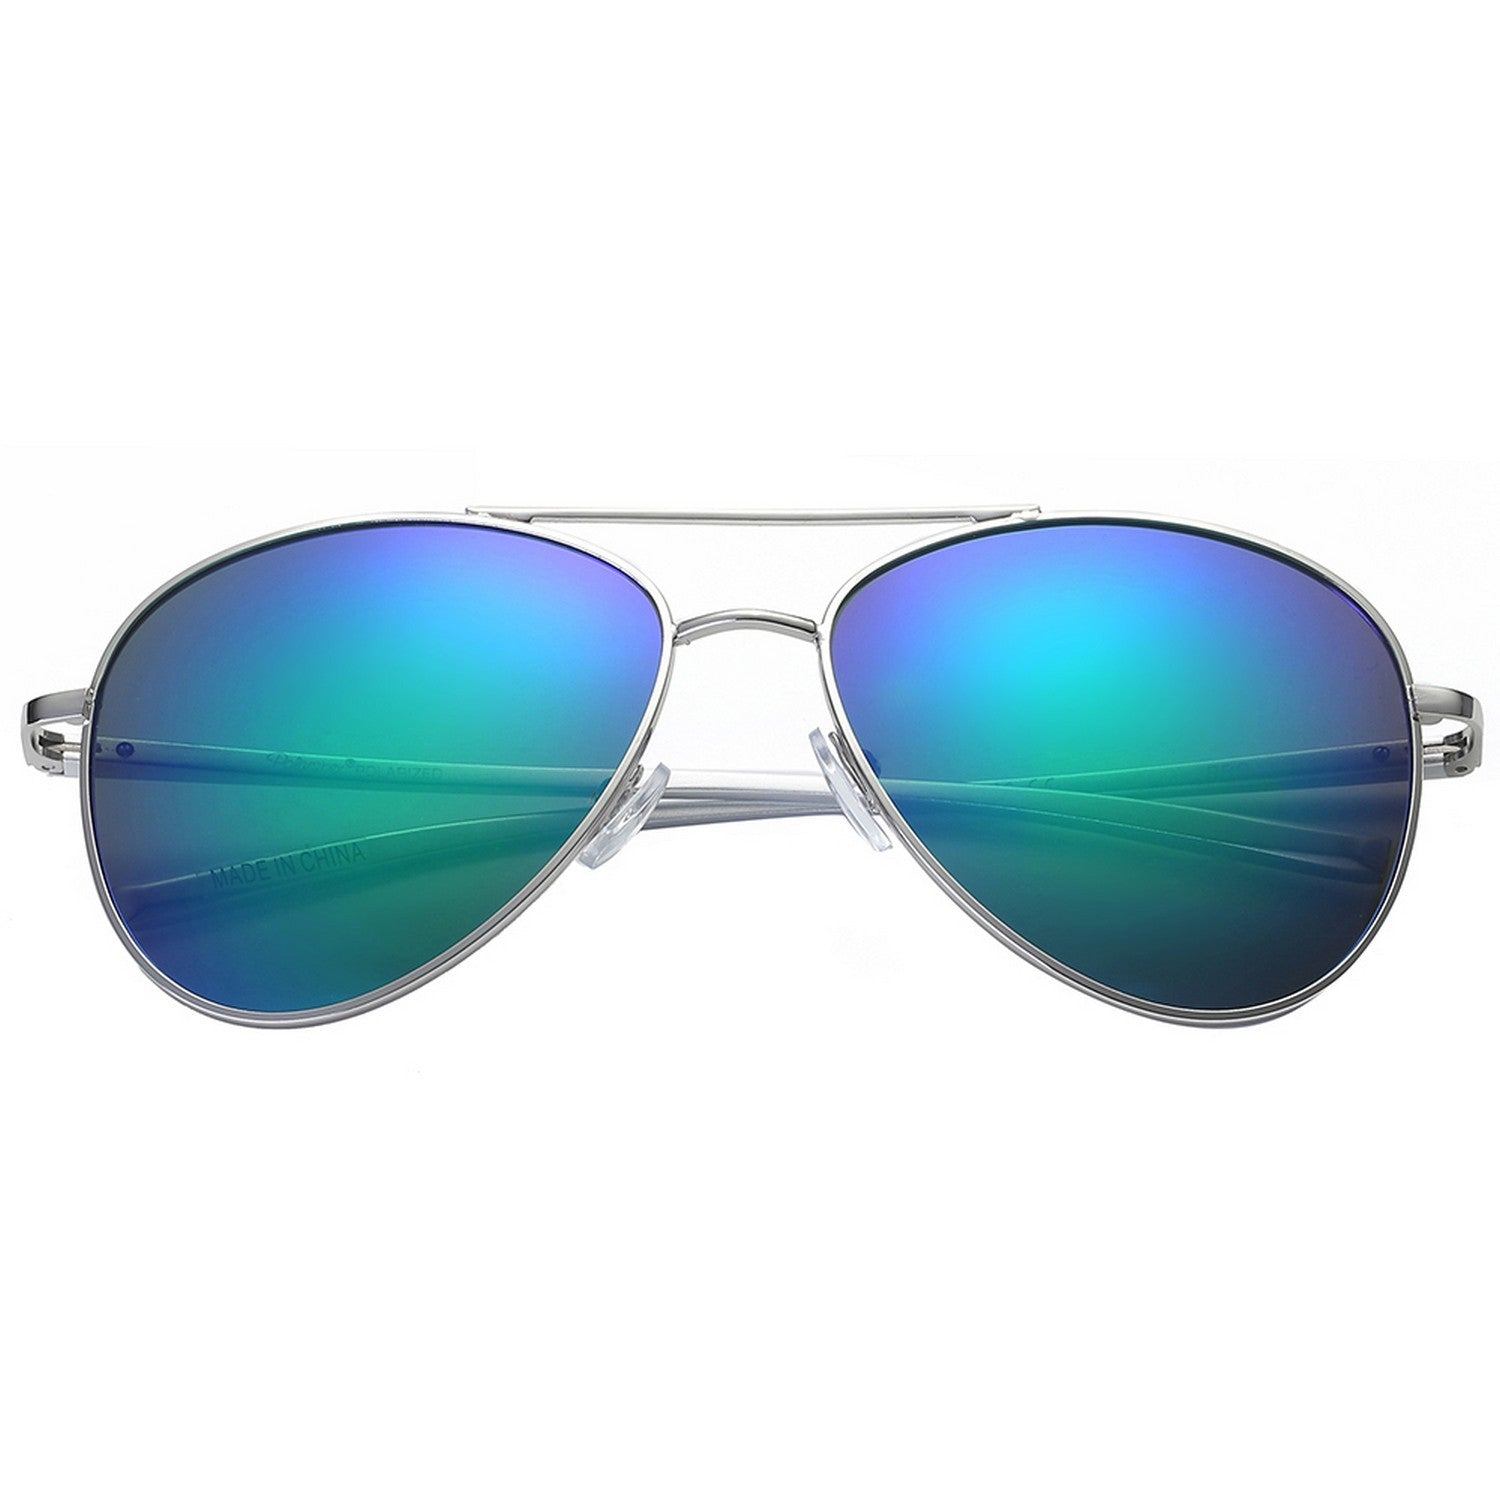 Adults Mens Sunglasses UV400 TAC Polorized Alloy Glasses